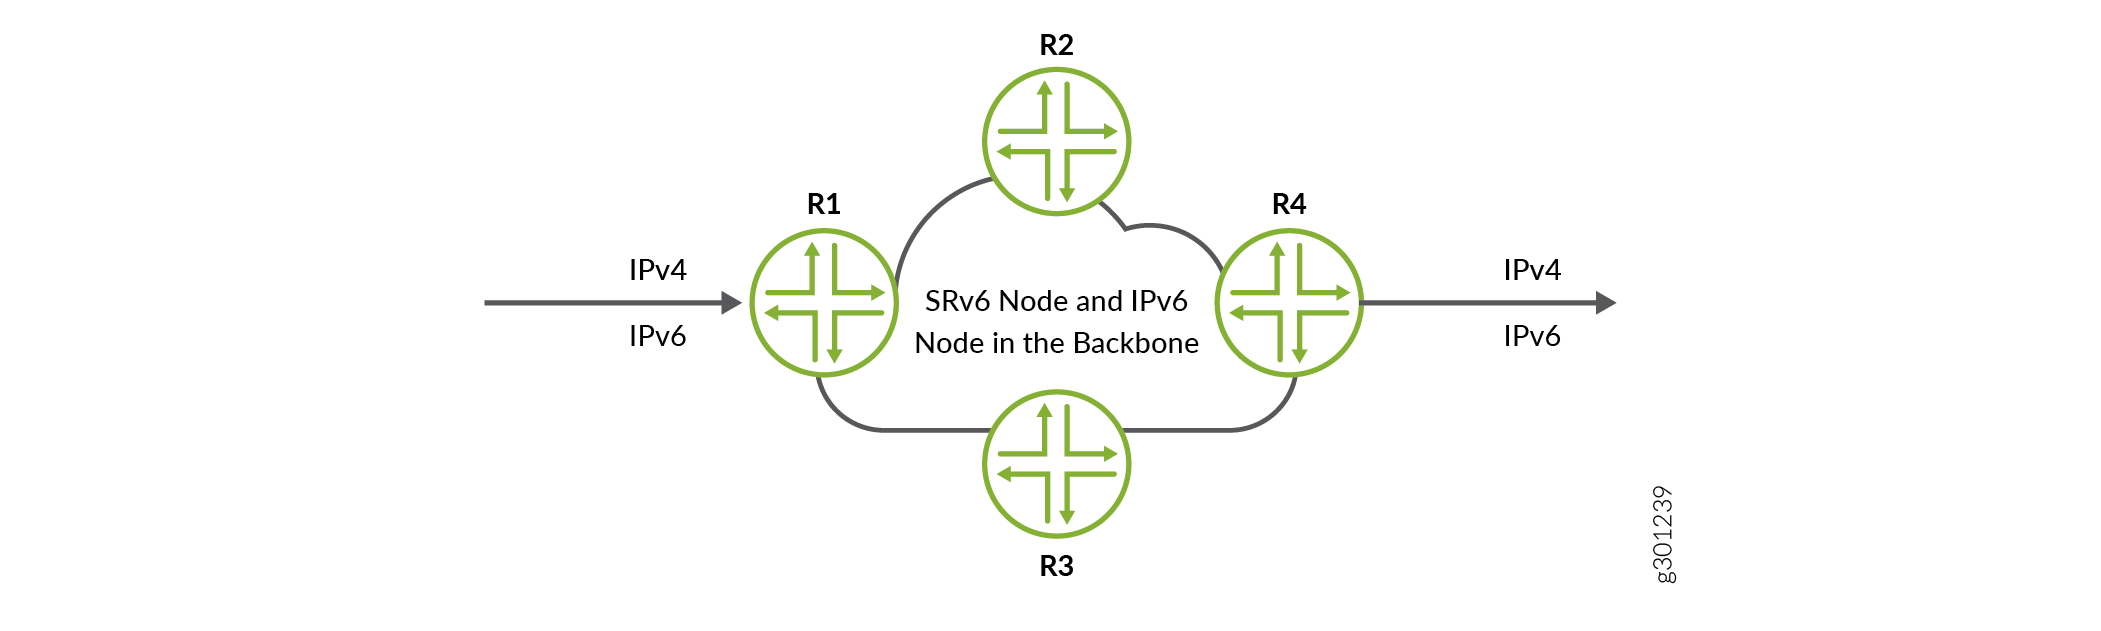 SRv6 Networki Programming Overview